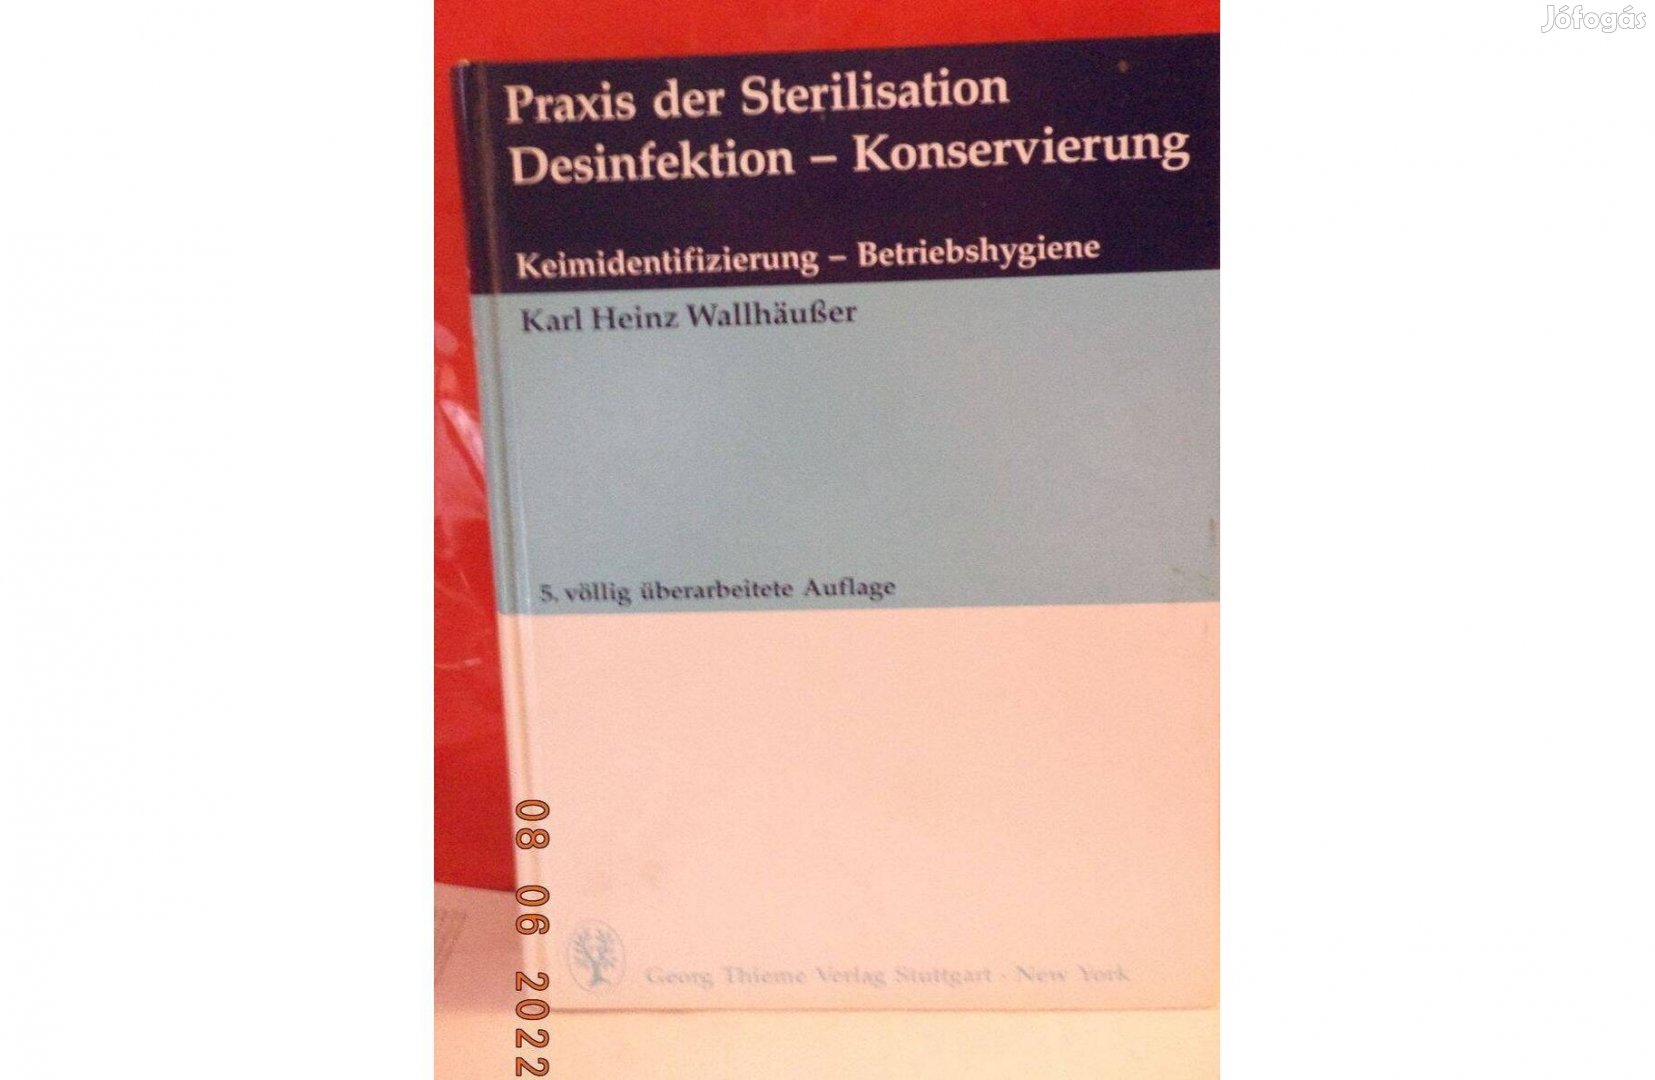 Karl Heinz Wallhäußetr: Német nyelvű orvosi könyv